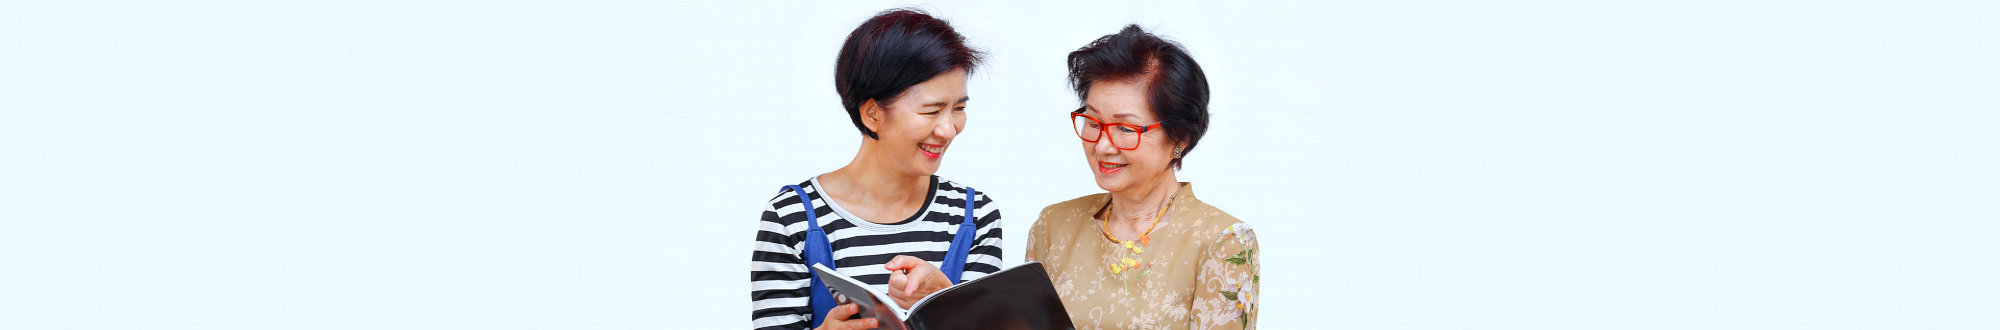 caregiver reading a book to a senior woman